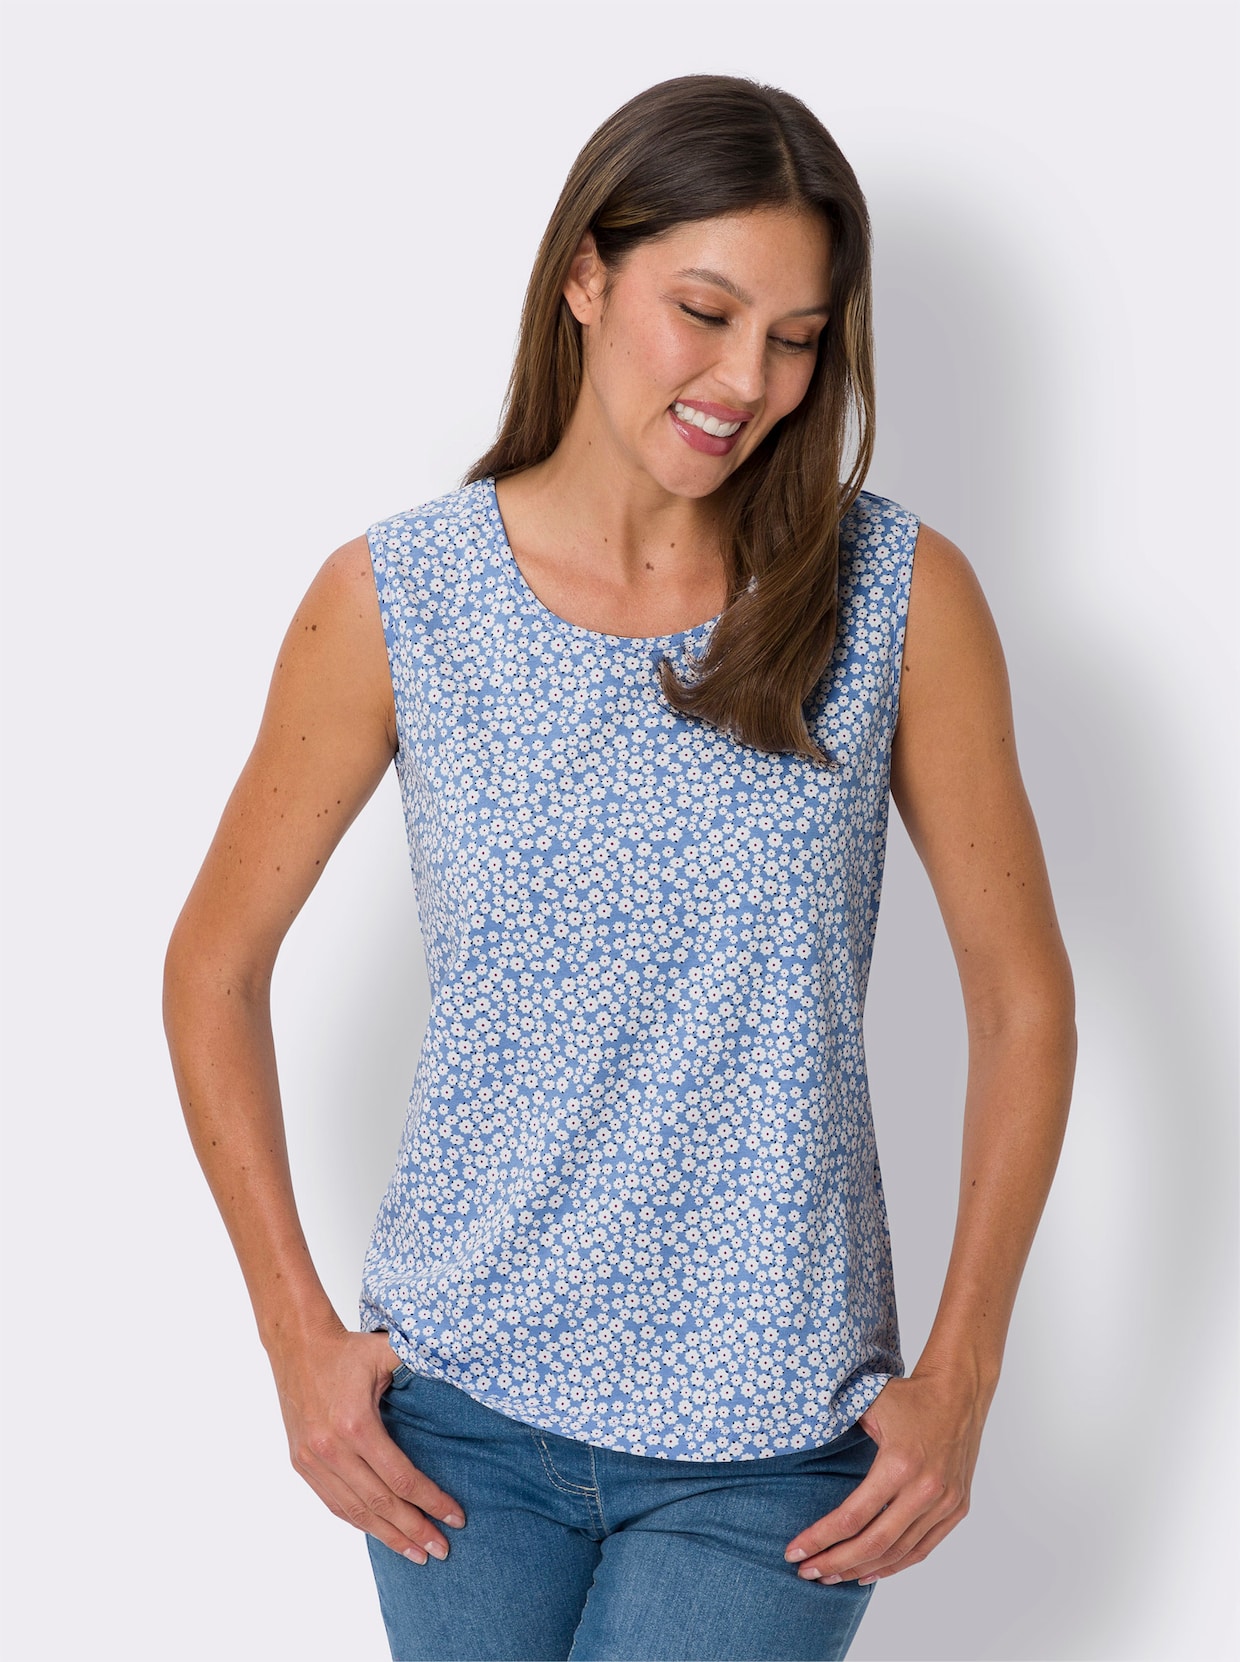 Shirttops - himmelblau + himmelblau-weiß-bedruckt